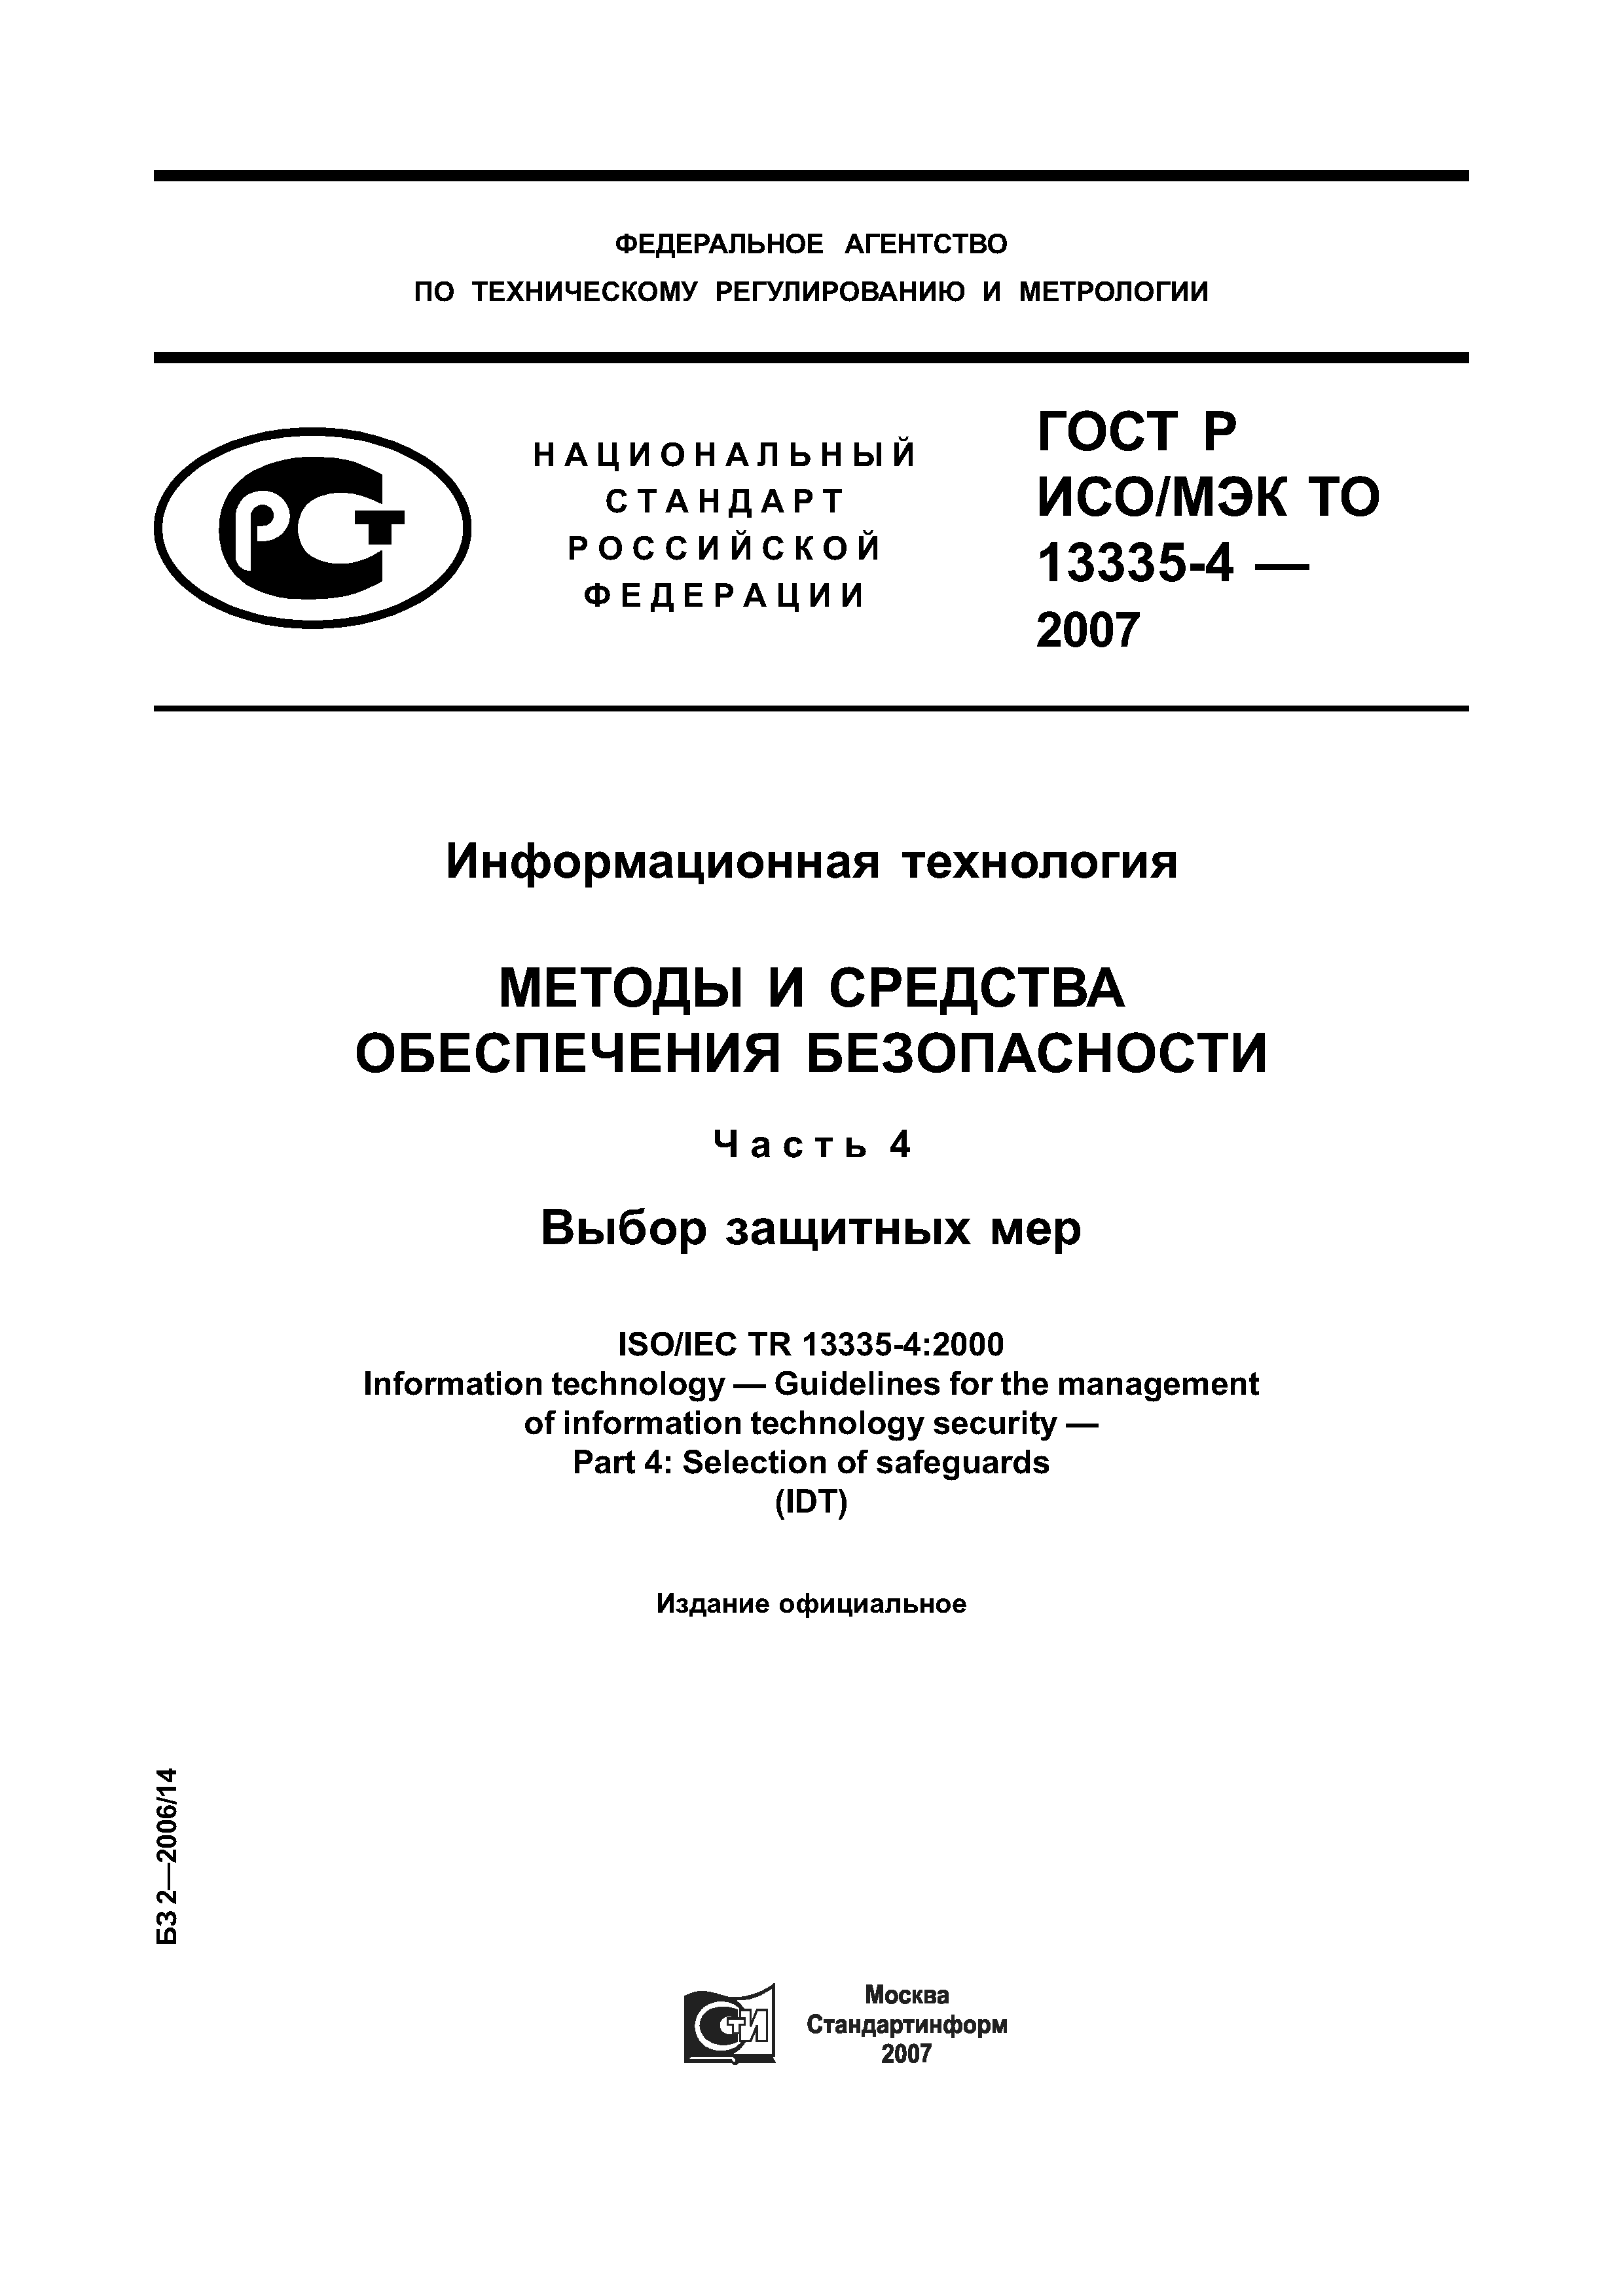 ГОСТ Р ИСО/МЭК ТО 13335-4-2007